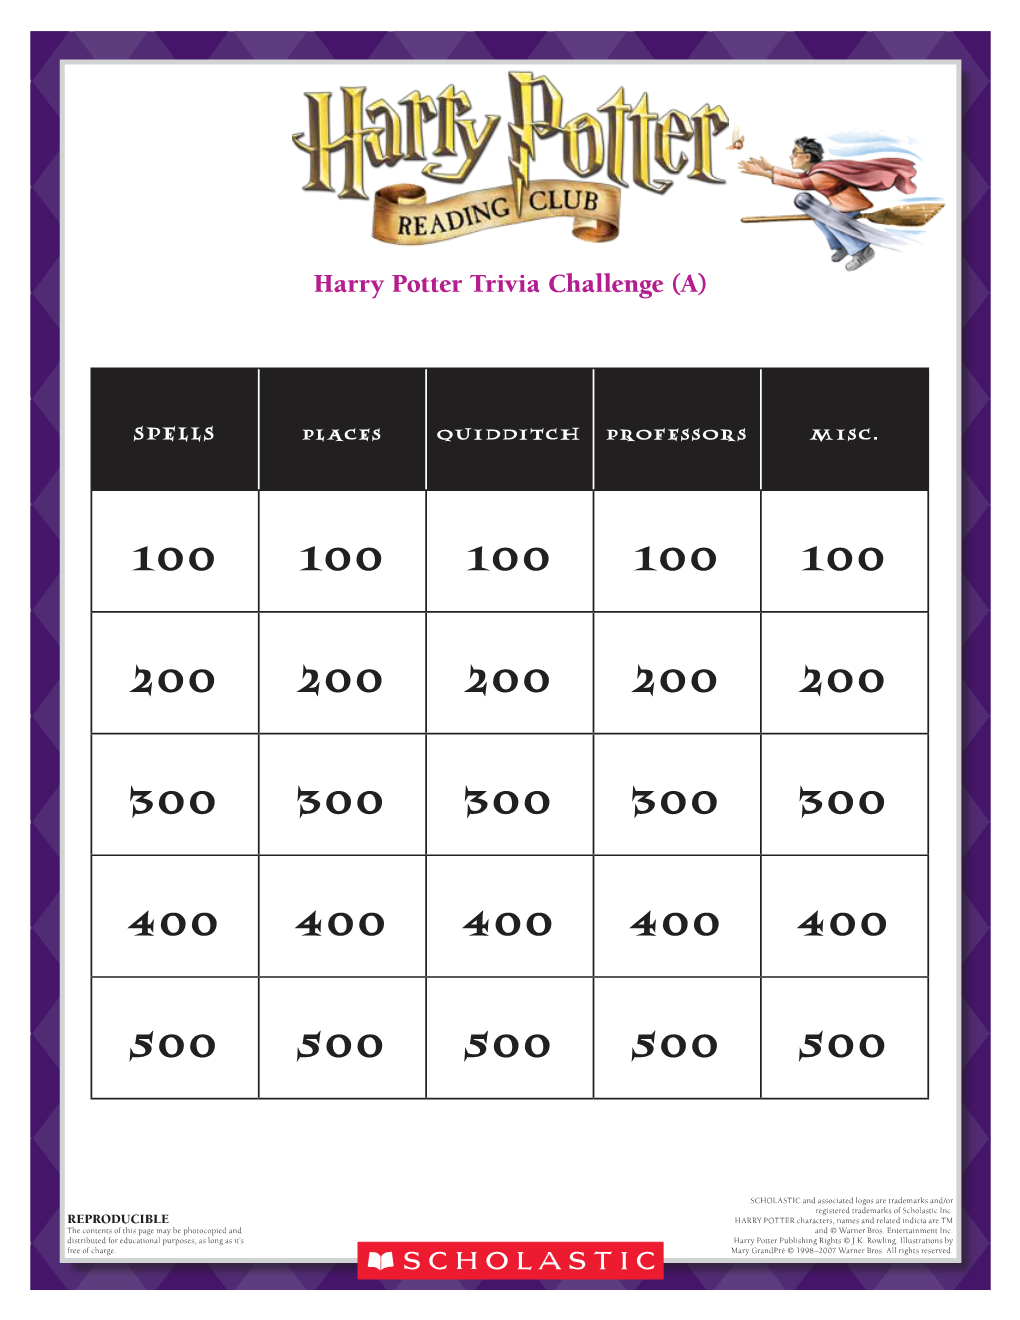 Harry Potter Trivia Challenge (A)